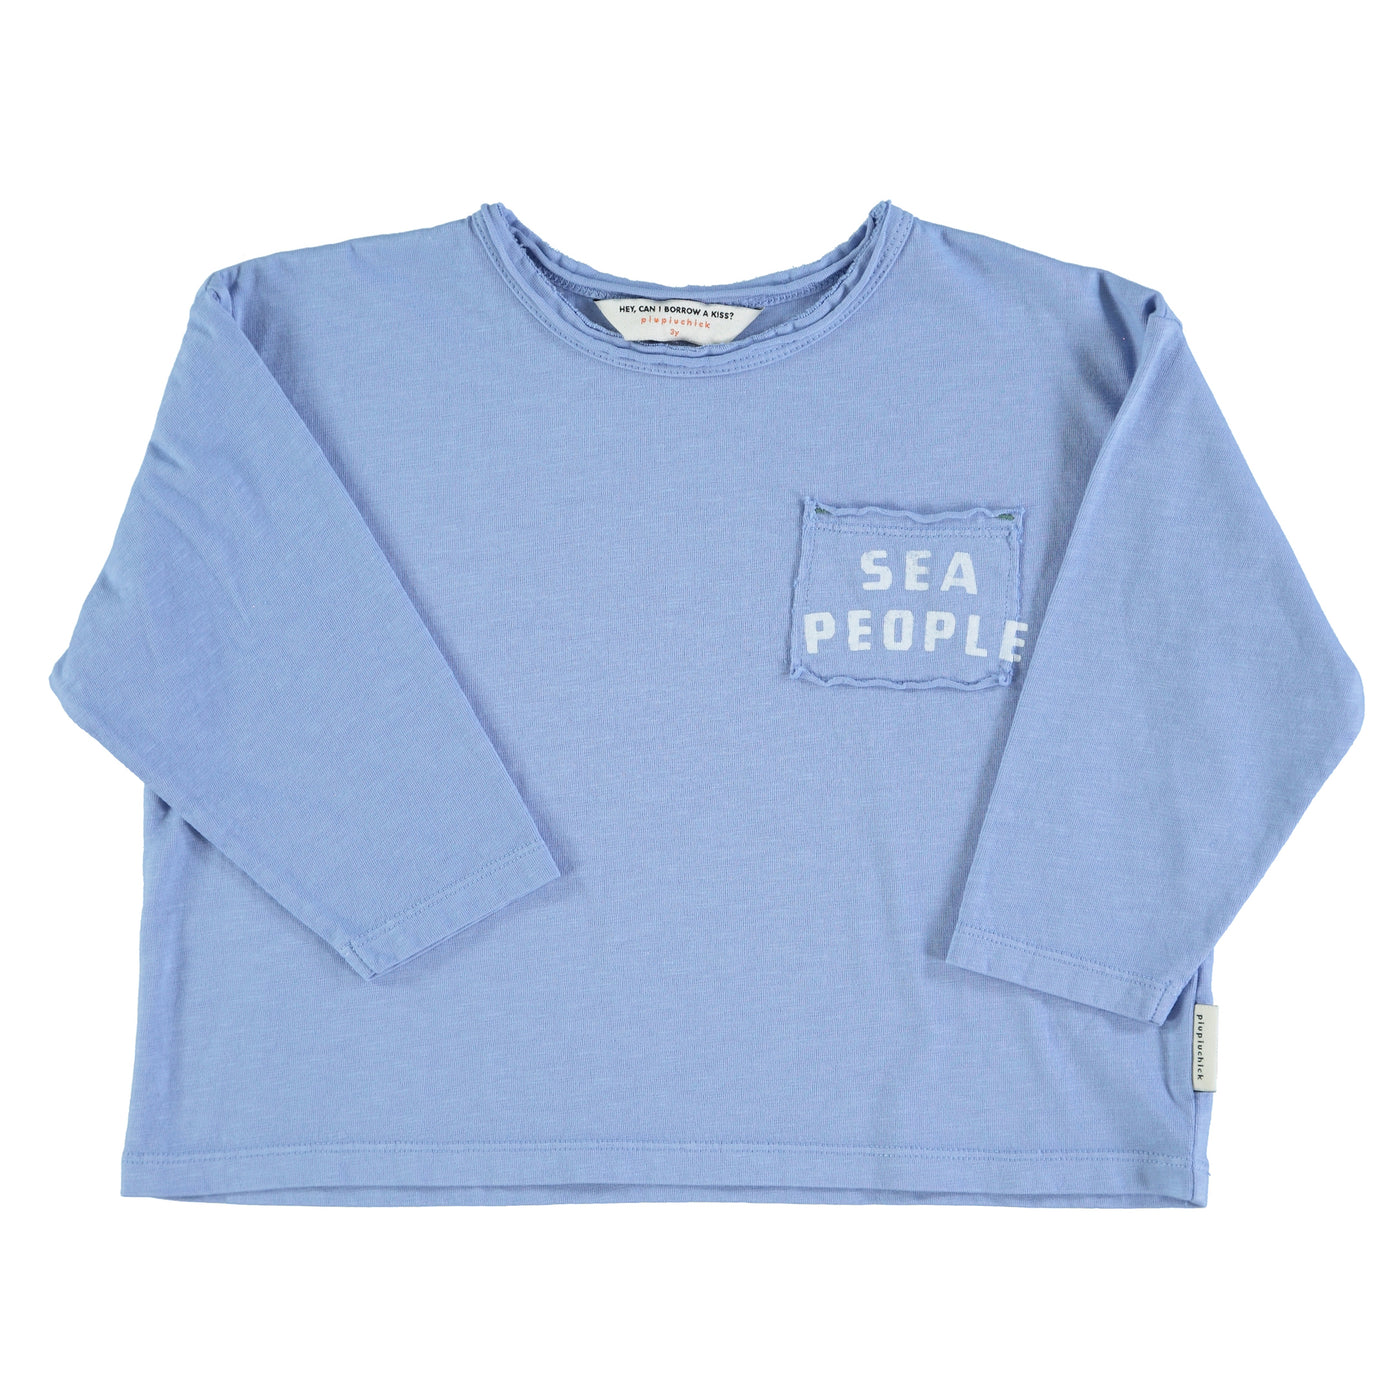 Piupiuchick longsleeve | blue with "sea people" print